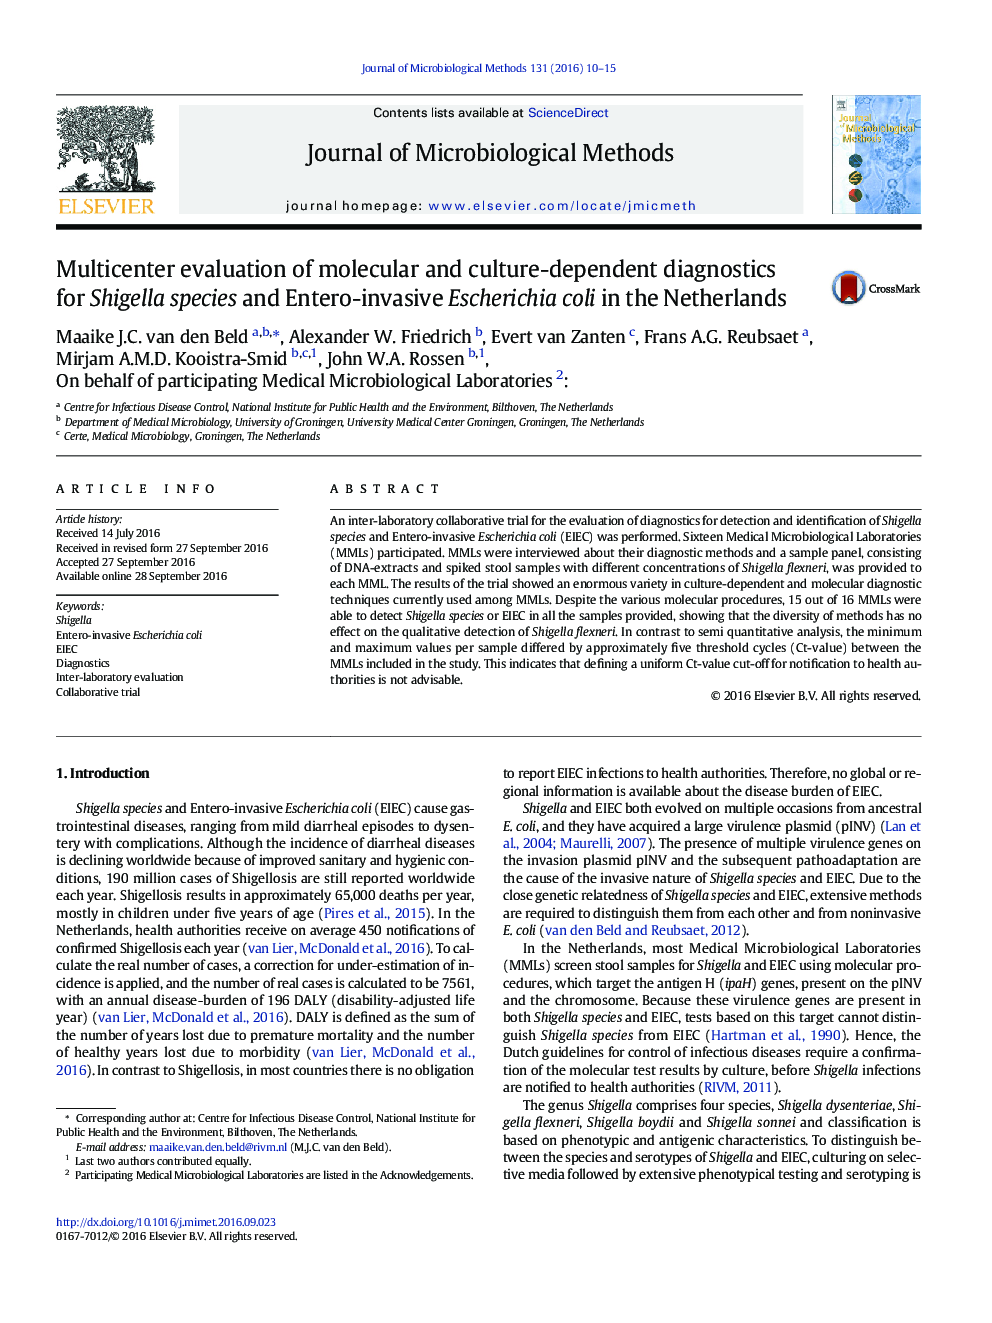 Multicenter evaluation of molecular and culture-dependent diagnostics for Shigella species and Entero-invasive Escherichia coli in the Netherlands